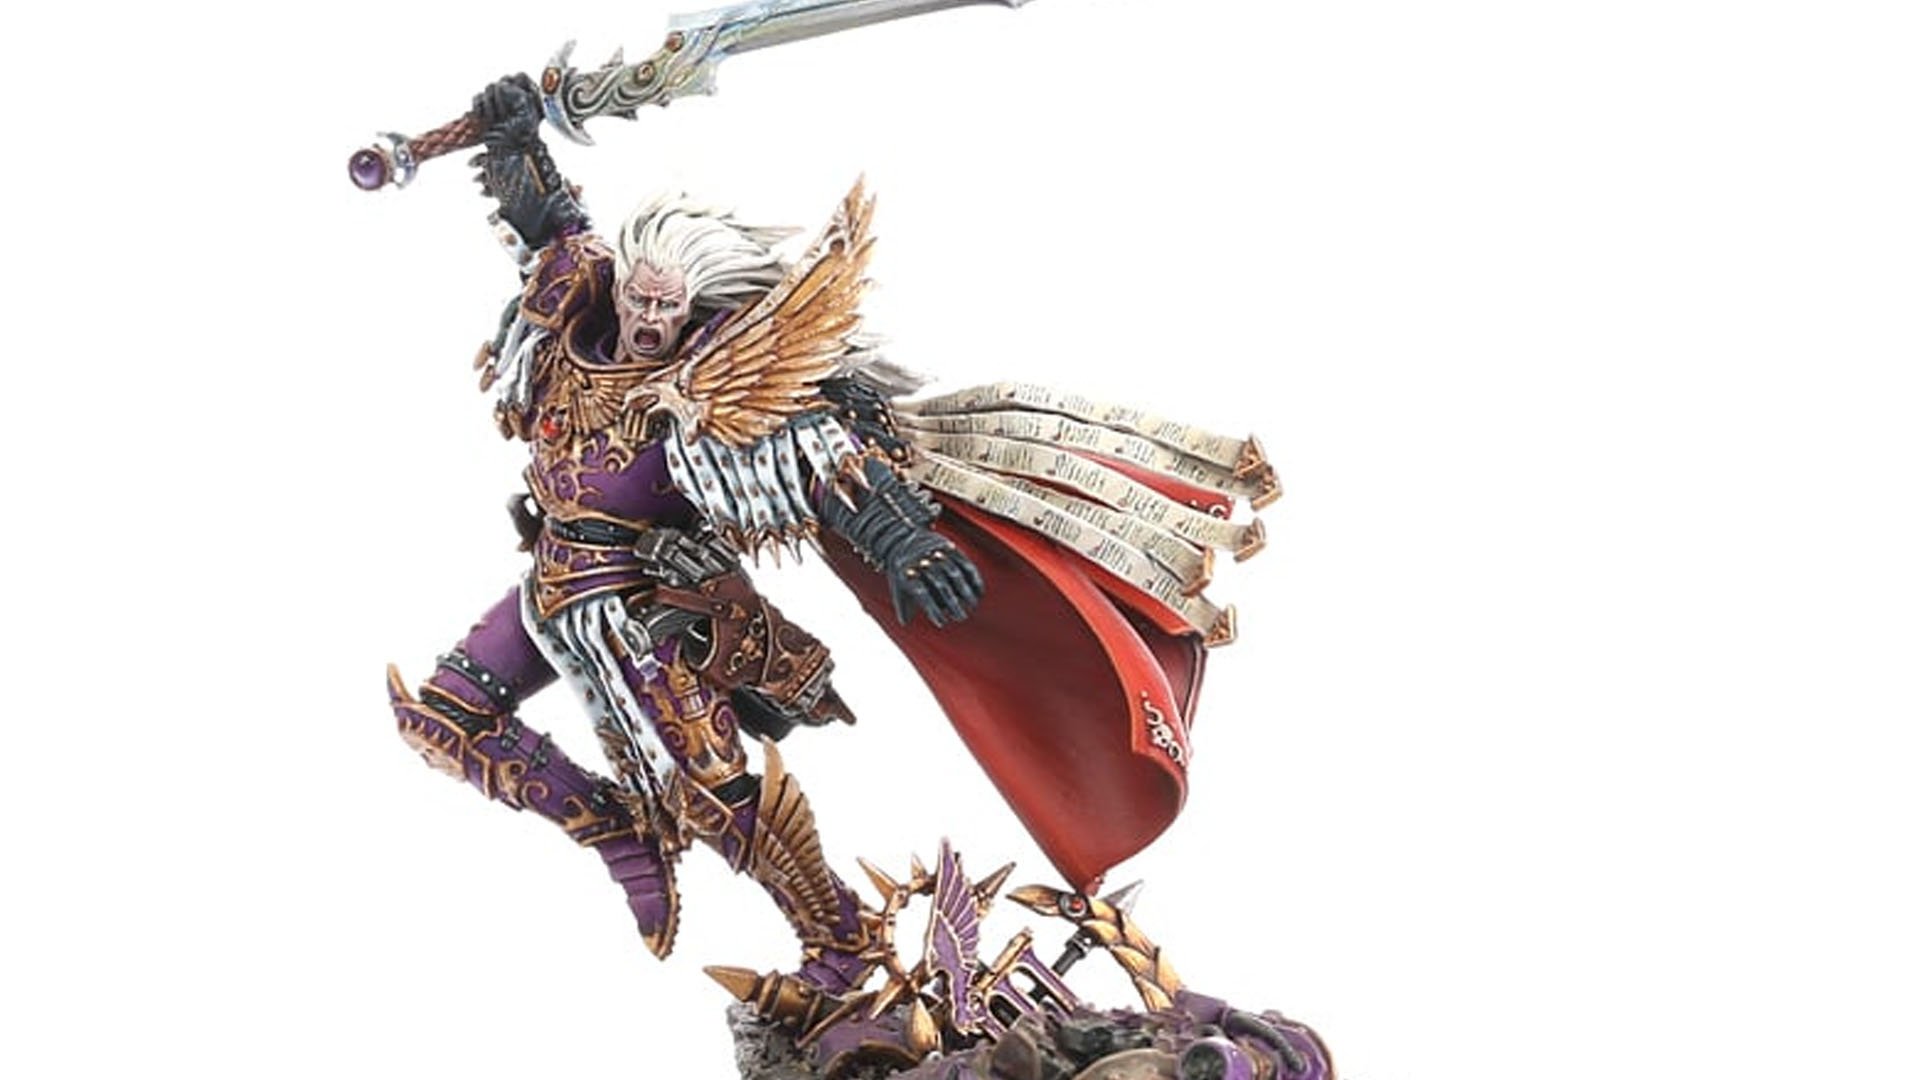 Warhammer 40k Fulgrim guide - Games Workshop image showing the Horus Heresy resin Fulgrim model